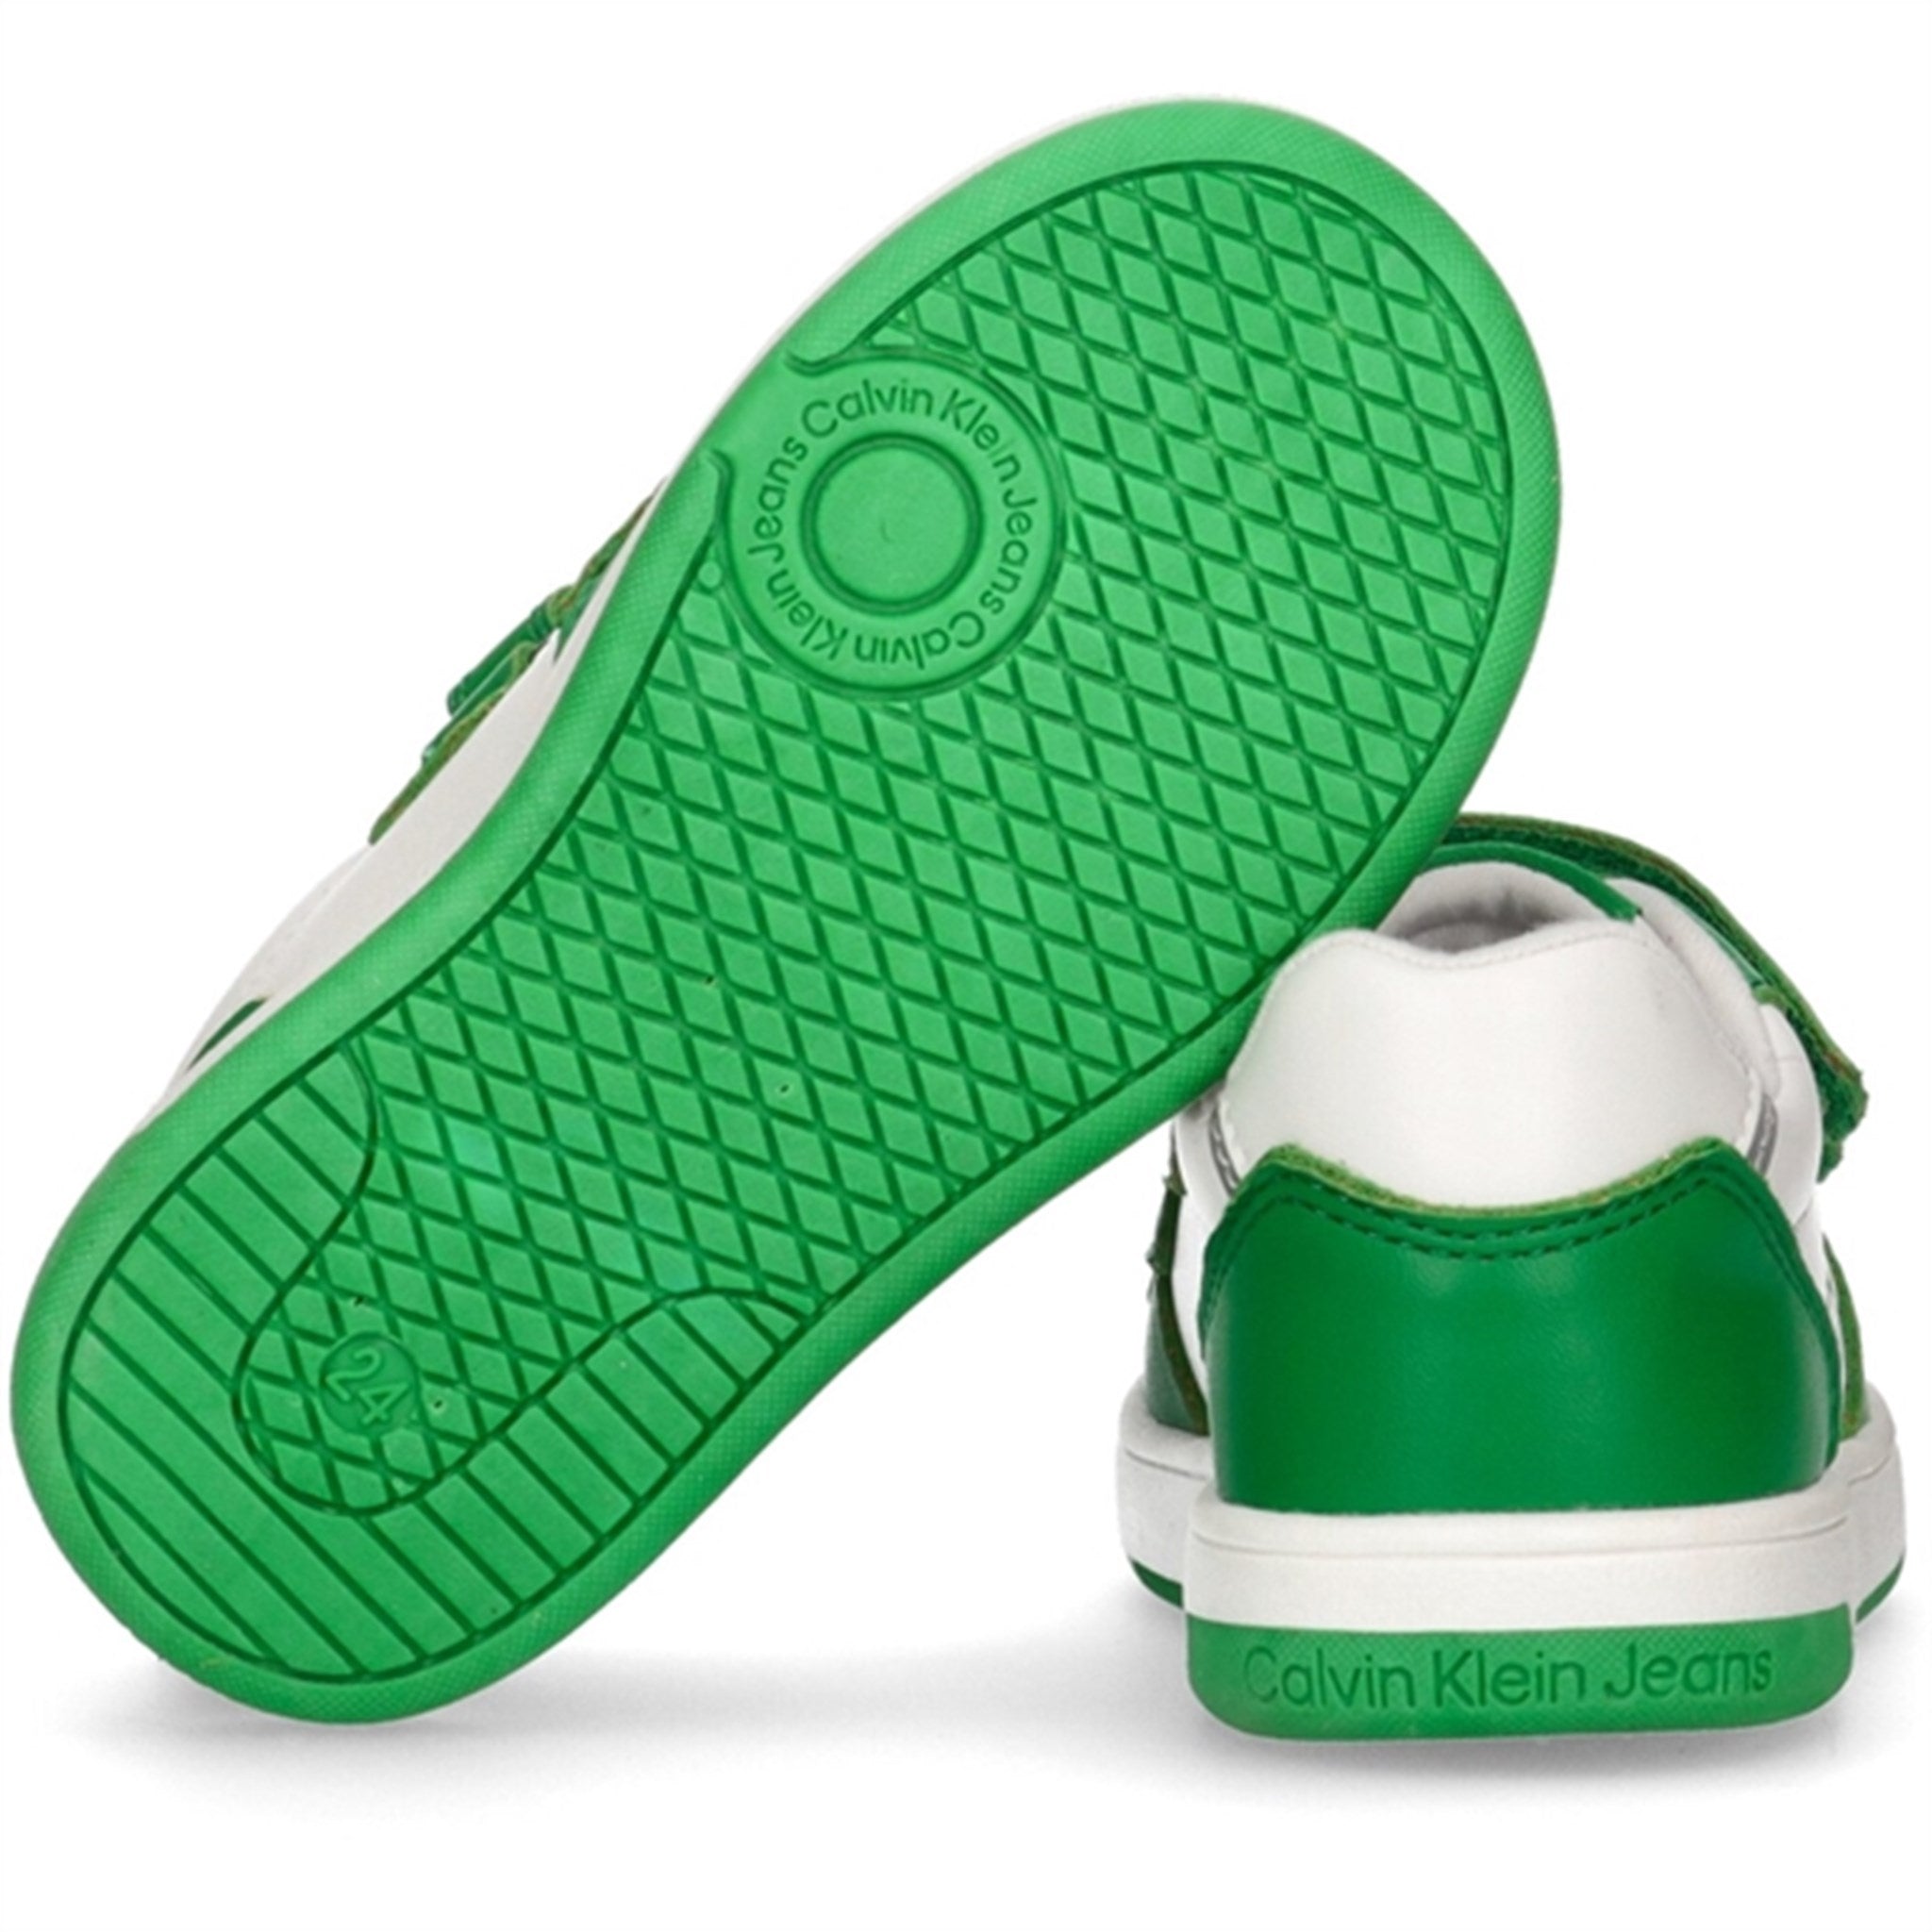 Calvin Klein Low Cut Velcro Sneakers Green/White 4